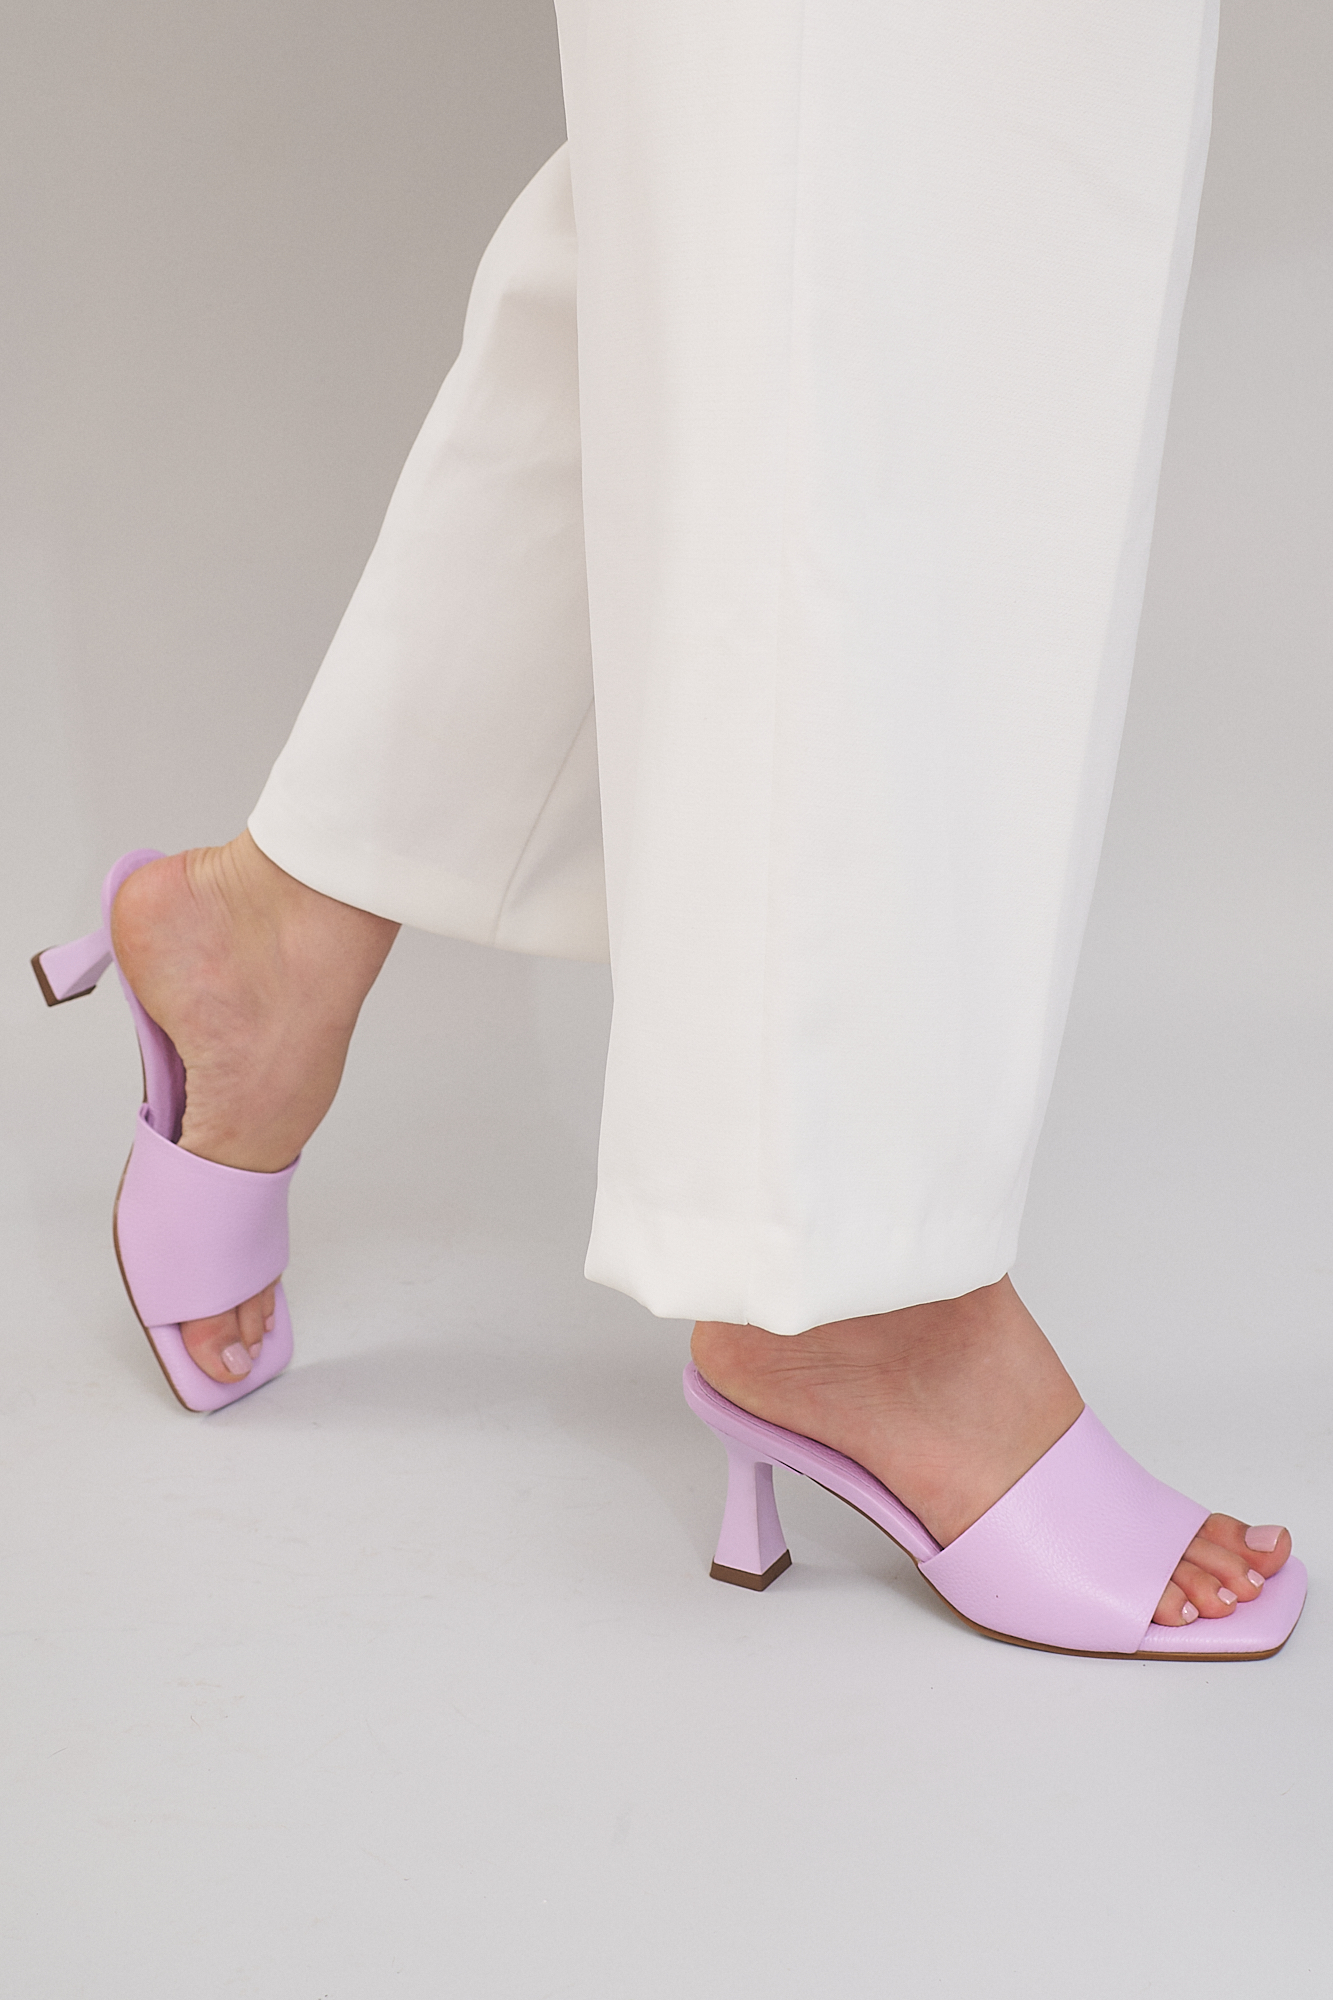 women with white pants wearing lavender peep toe heels from emilia merz